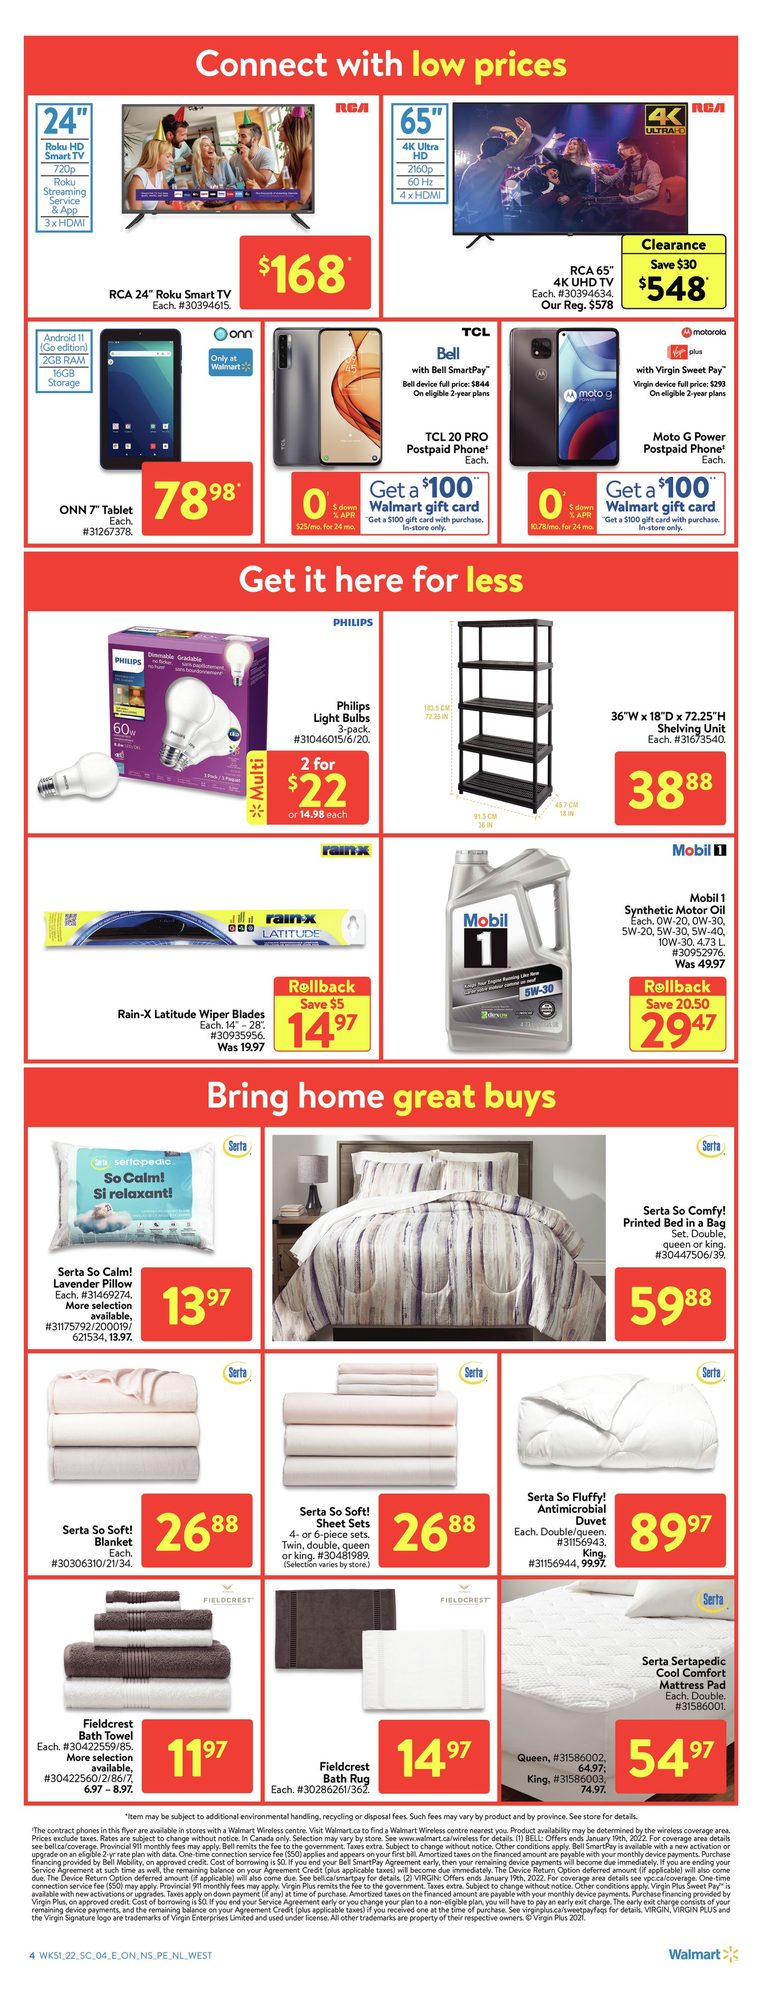 Walmart - Weekly Flyer Specials - Page 15